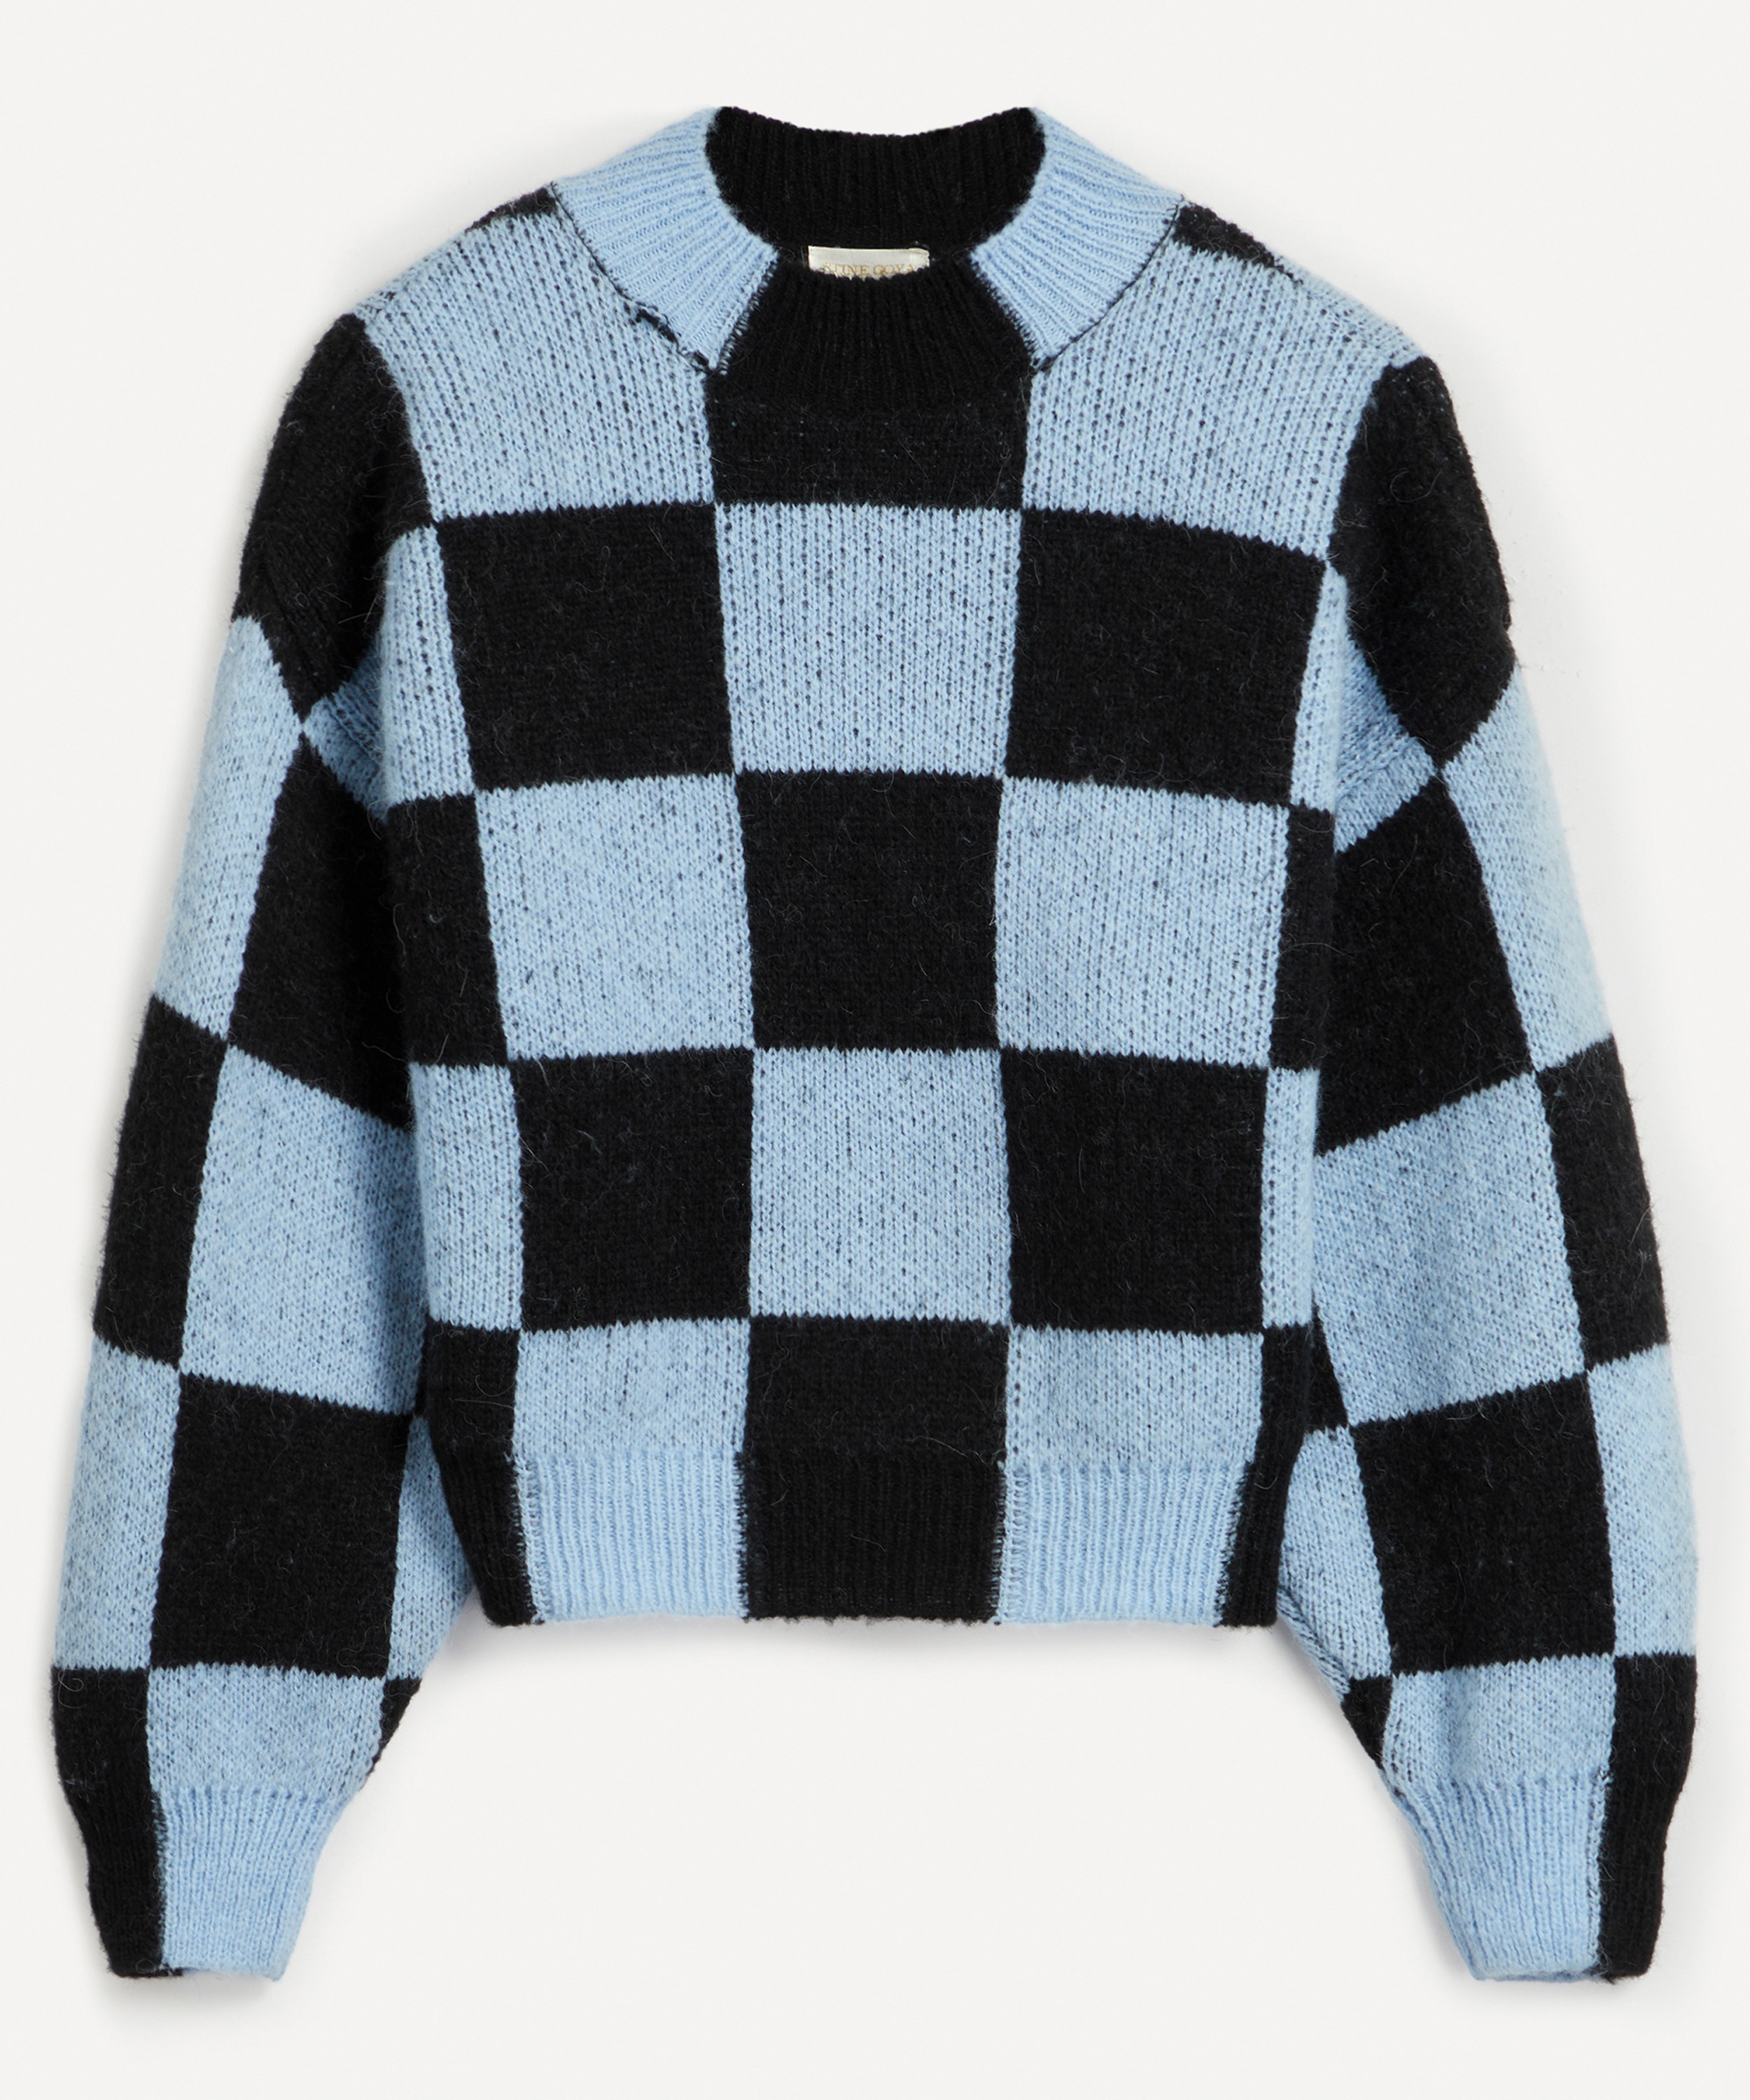 Sweater (Adonis) from Stine Goya